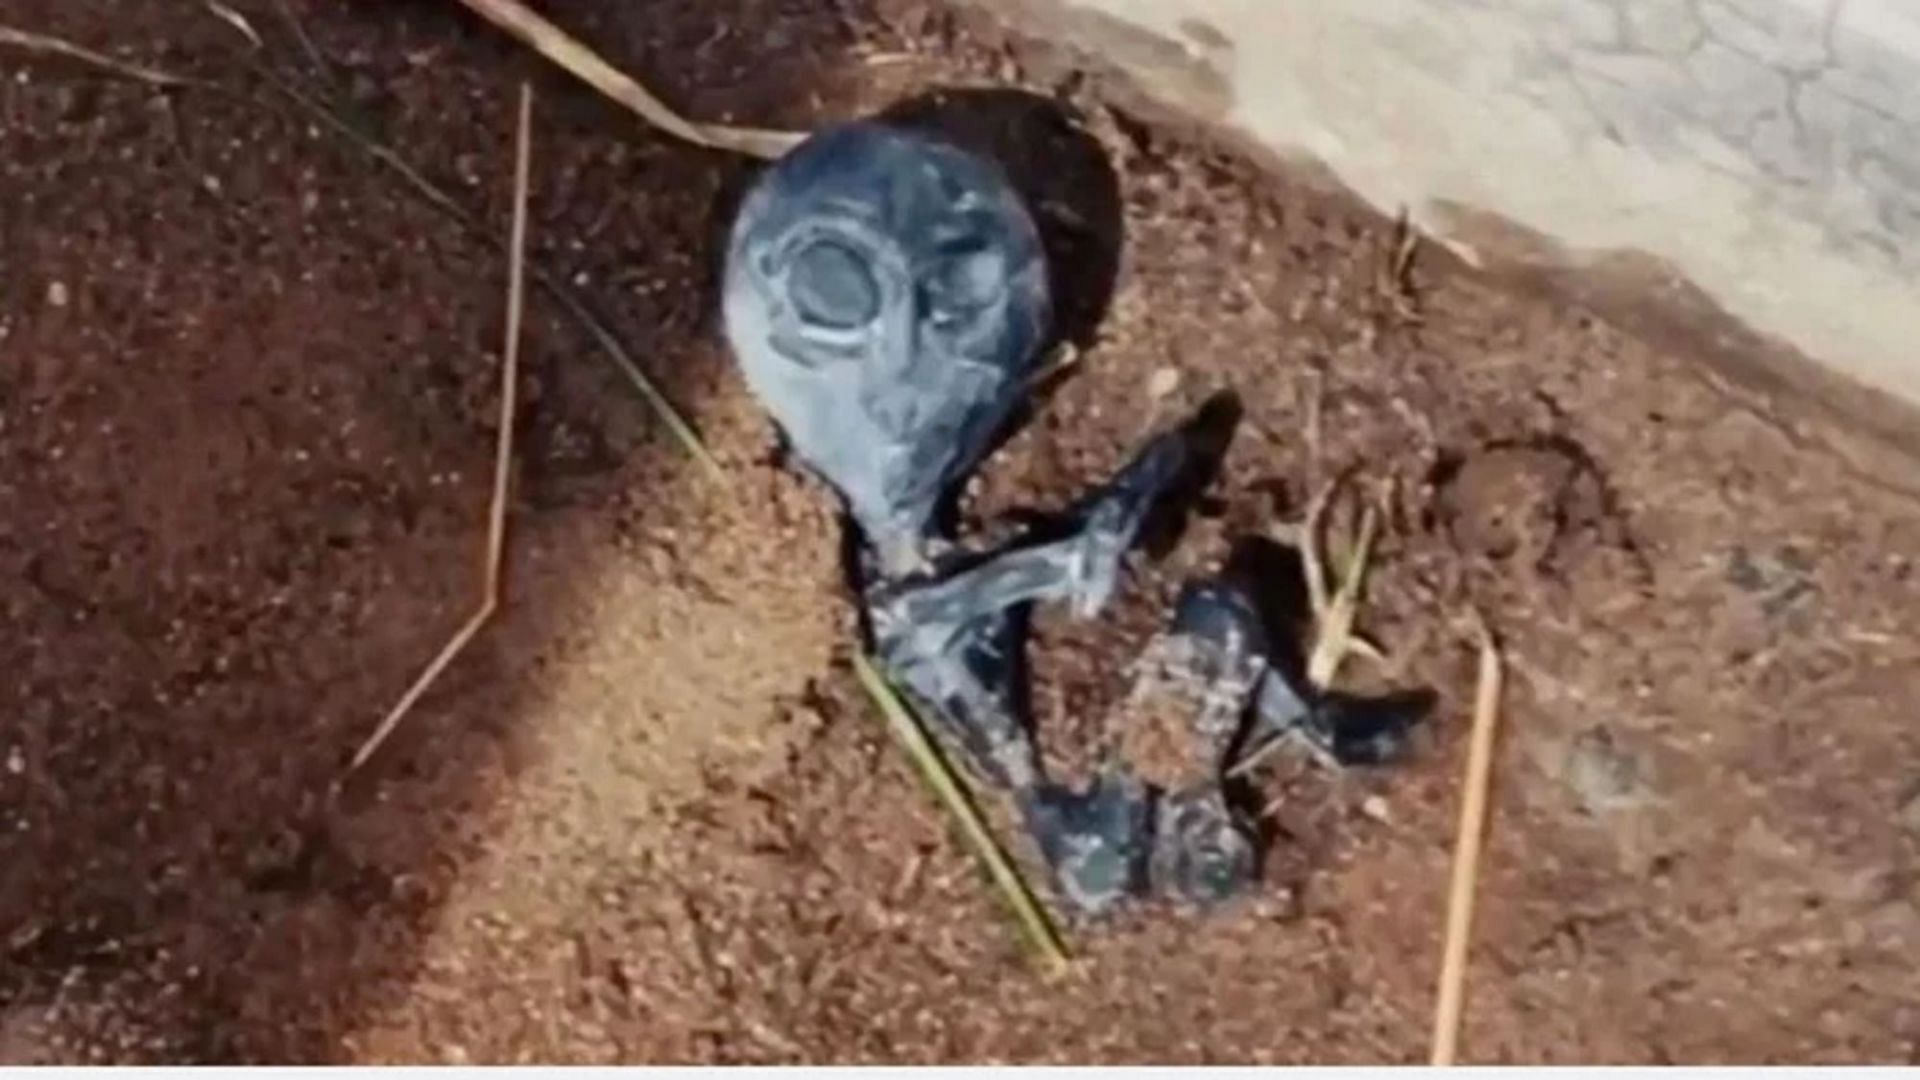 Supposed dead body of alien found in Bolivia (Image via Al Rojo Vivo/YouTube)